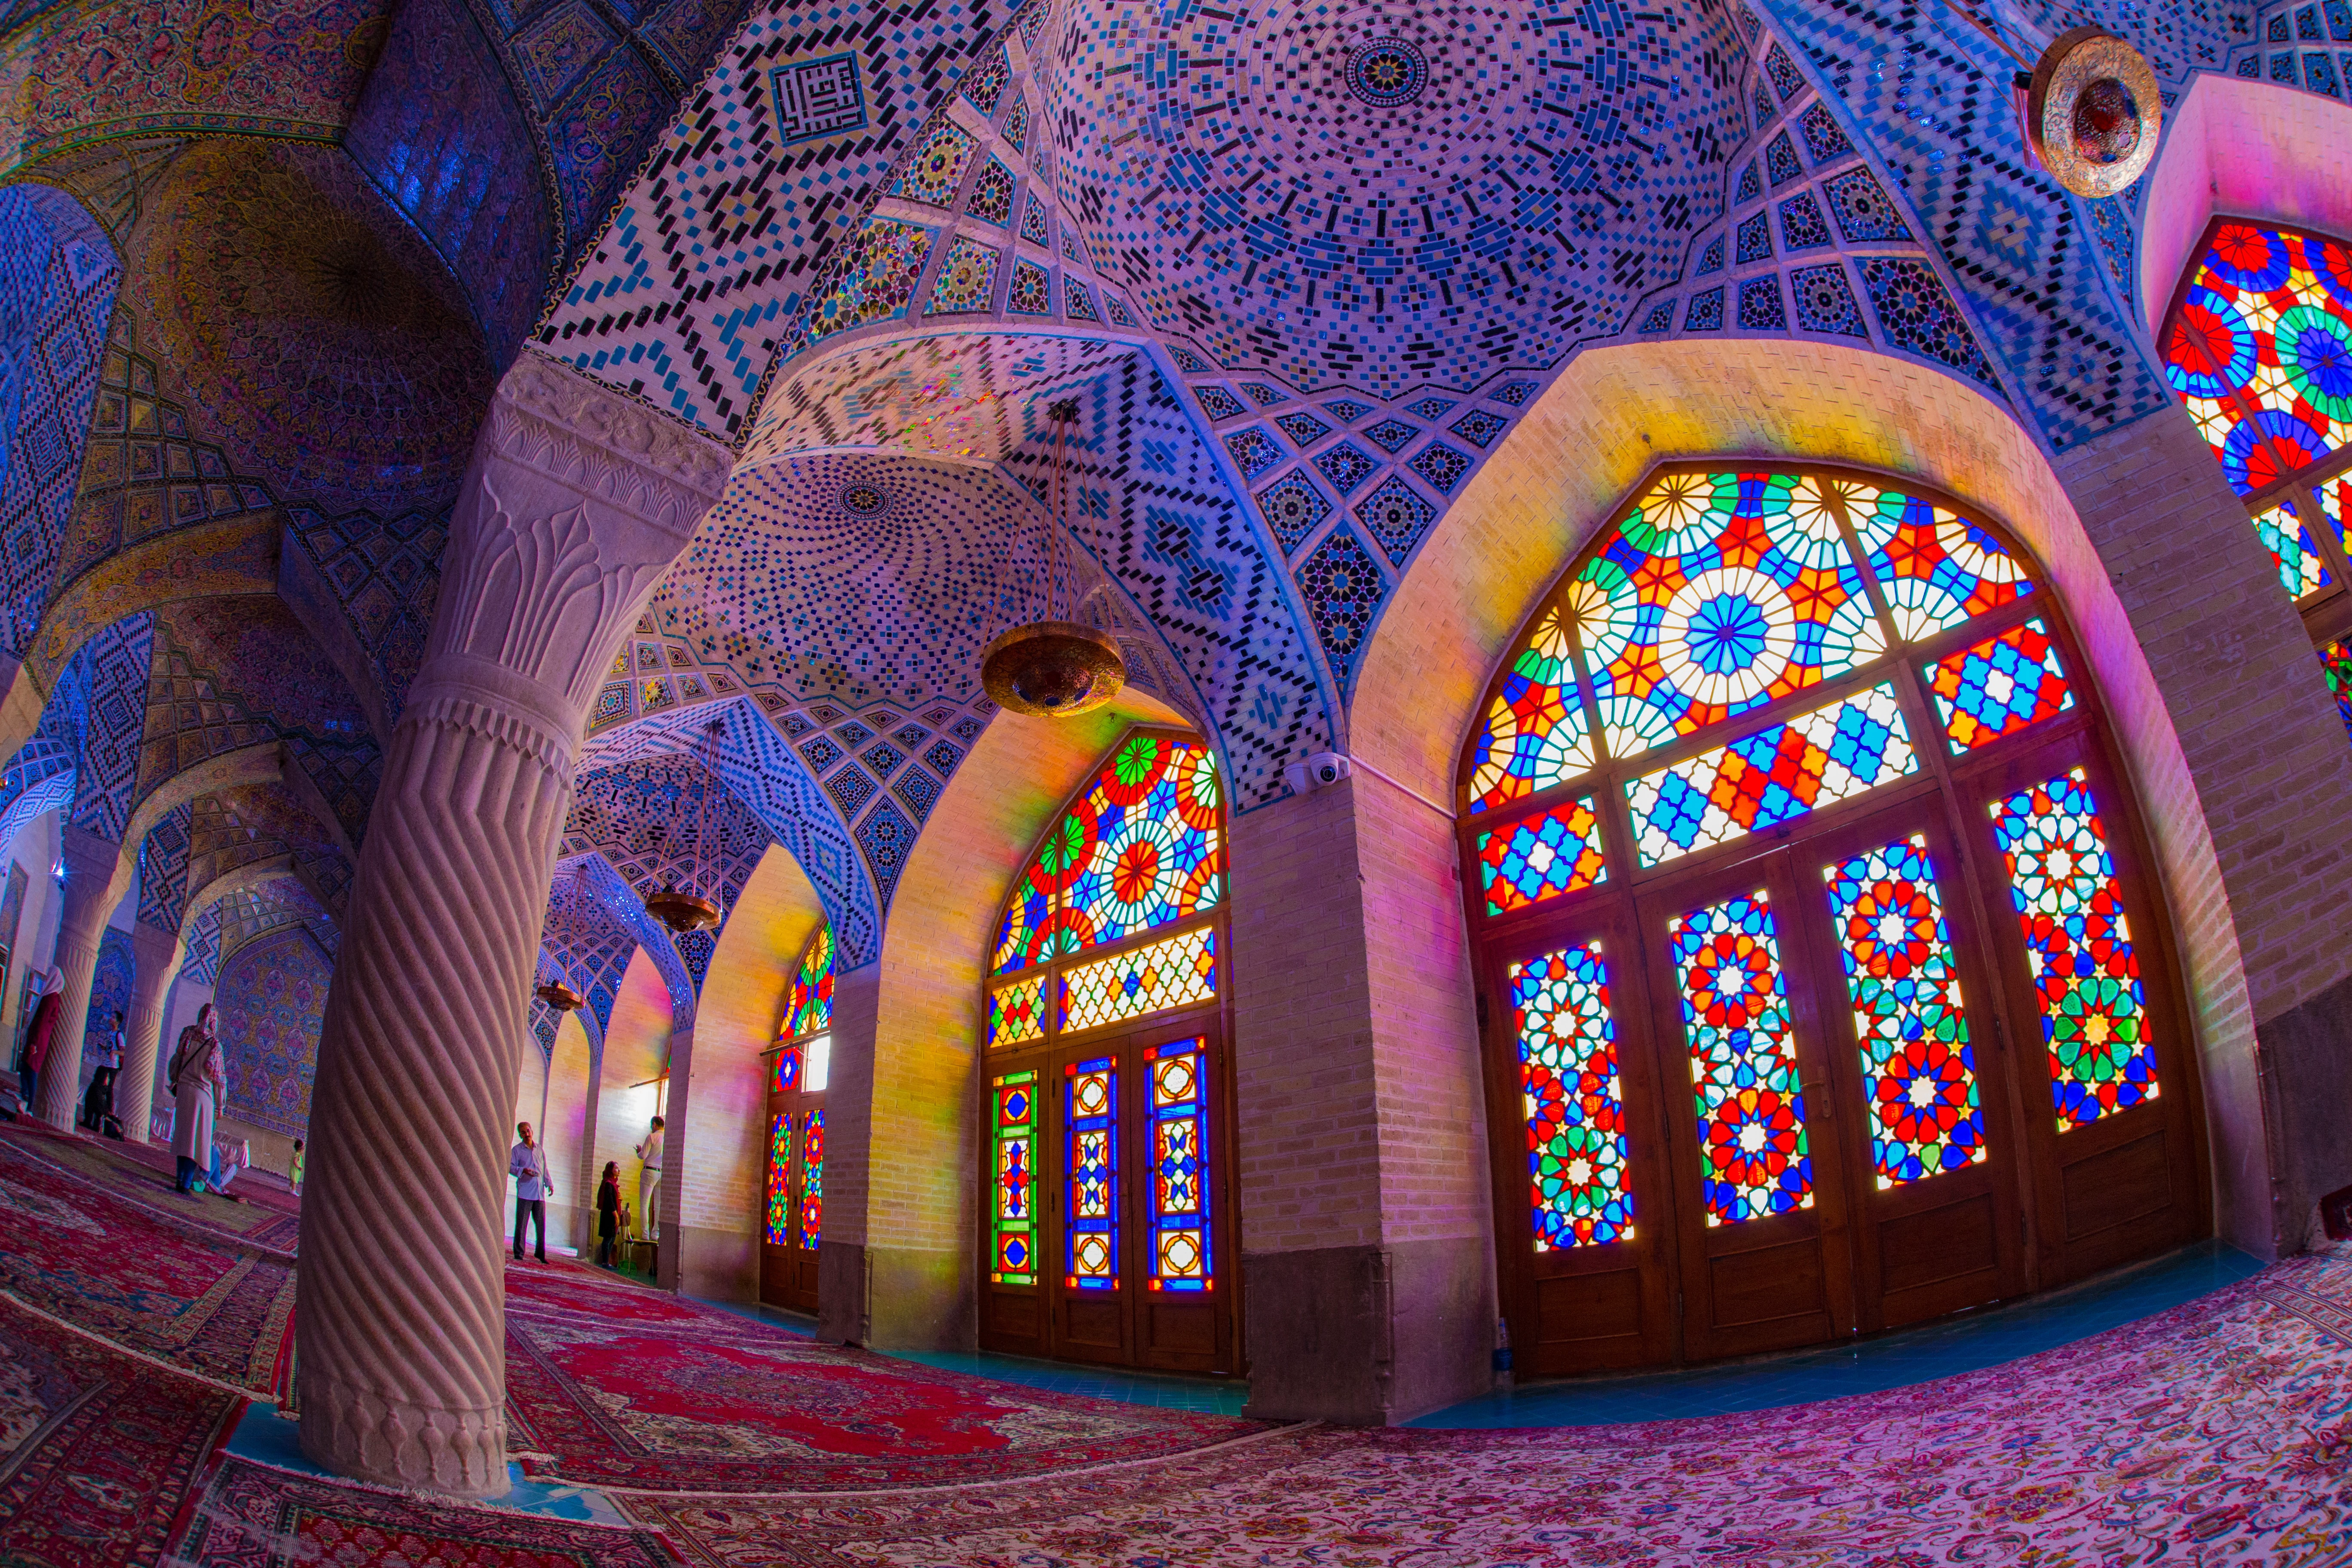 Nasir al-Mulk Mosque in Iran